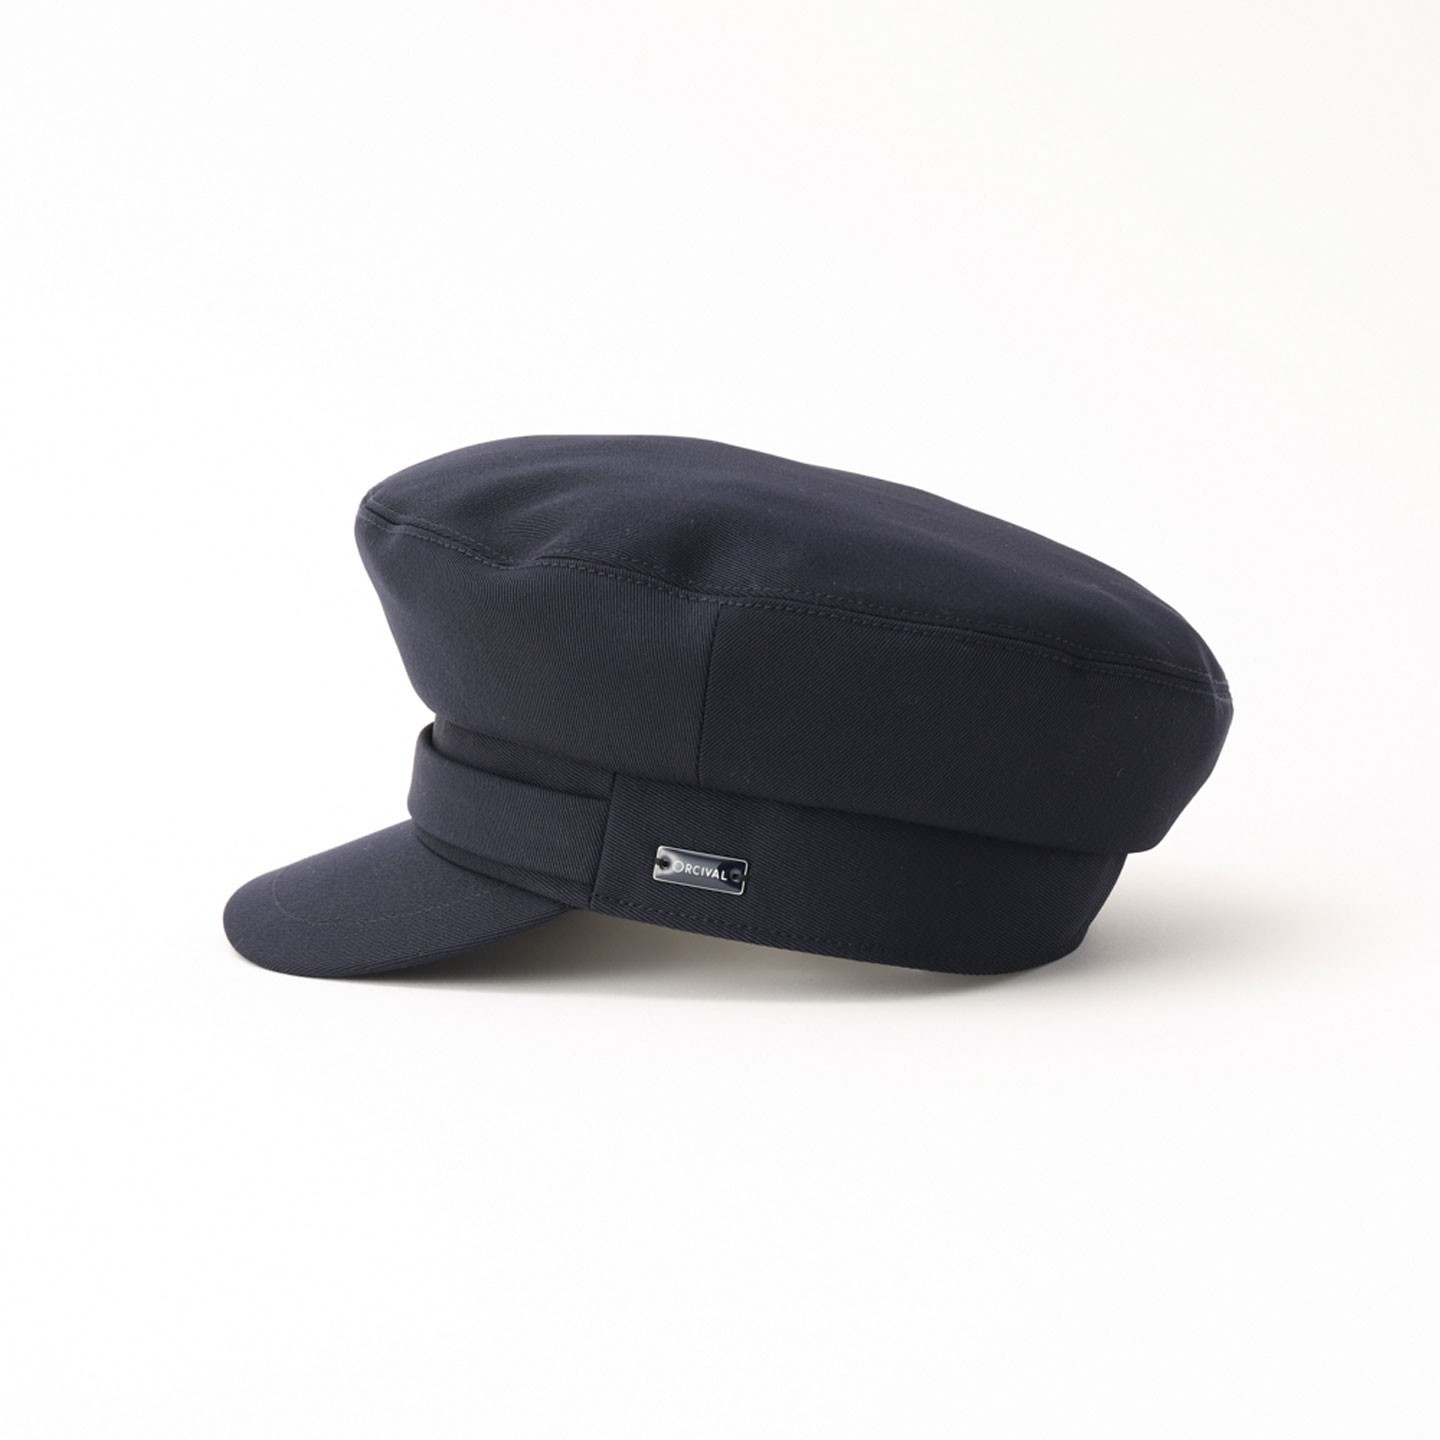 Black maritime cap